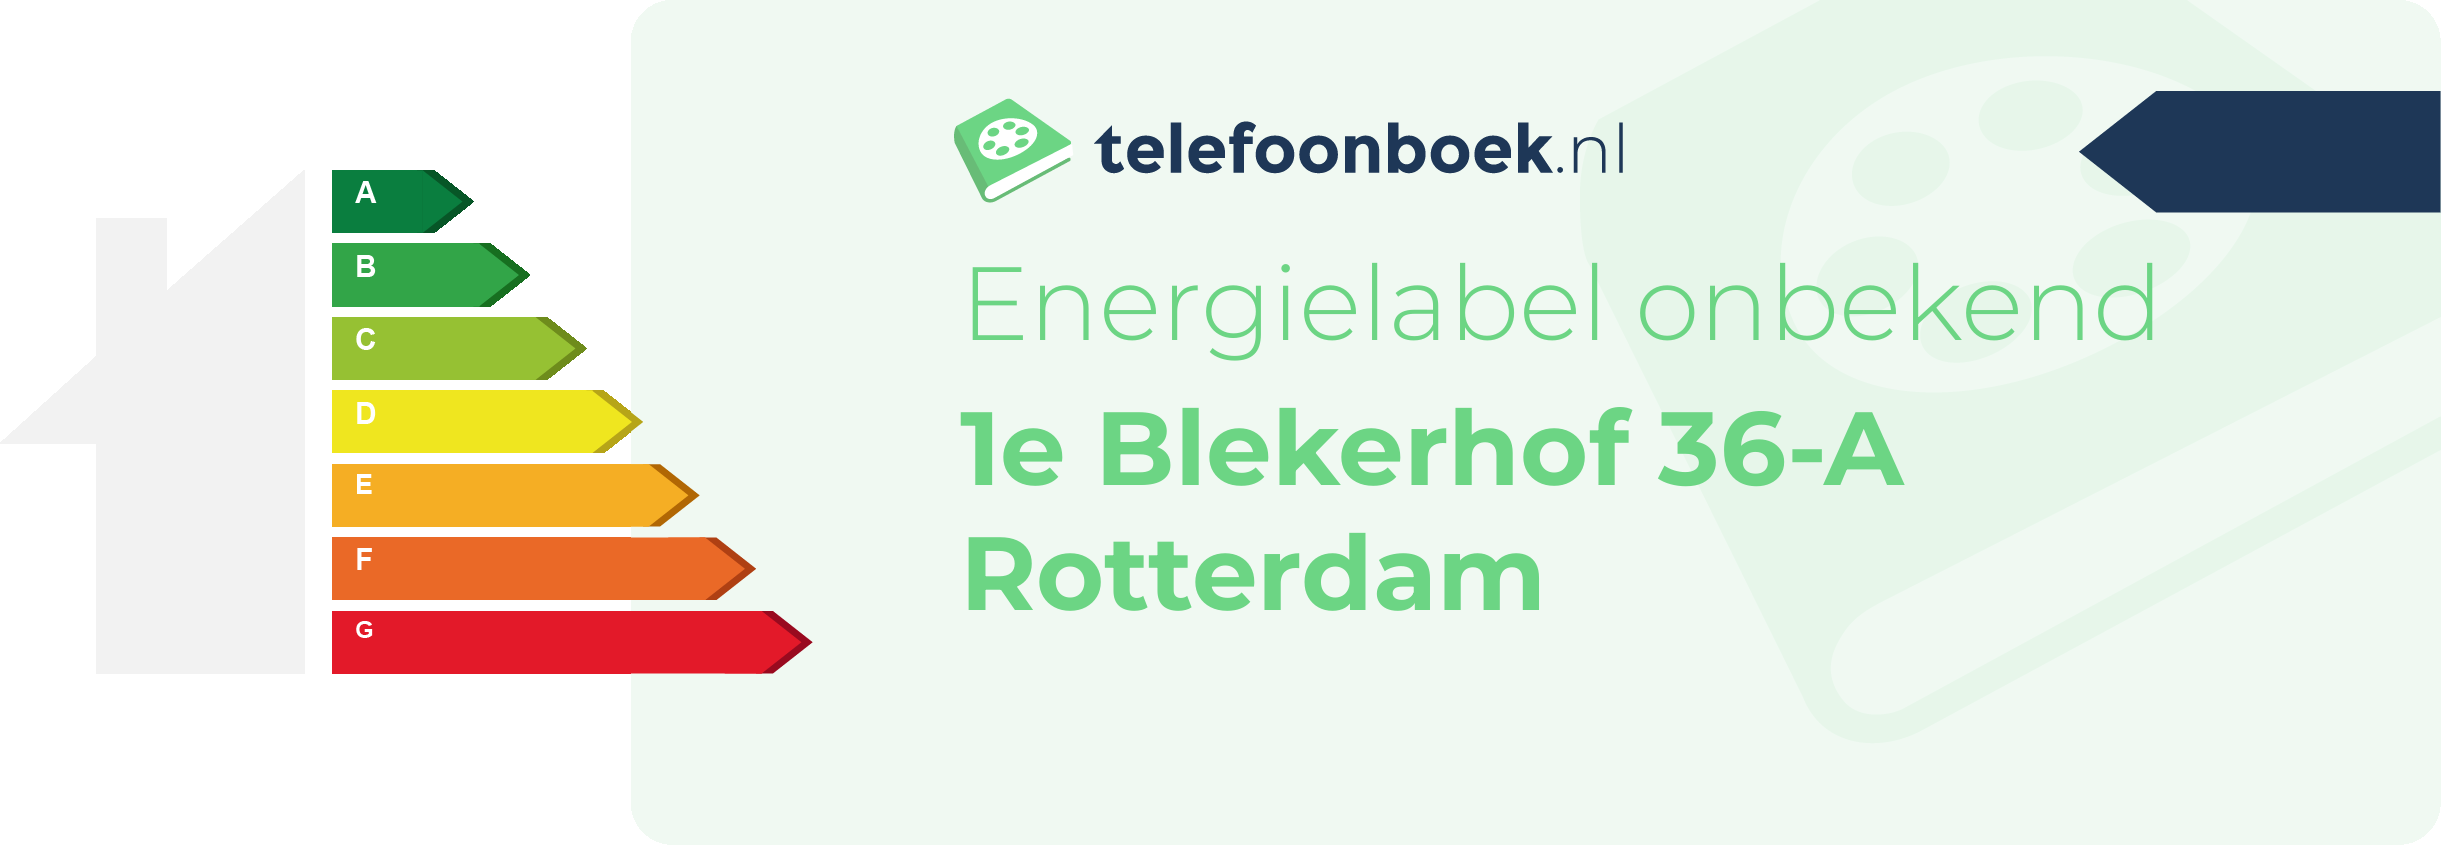 Energielabel 1e Blekerhof 36-A Rotterdam